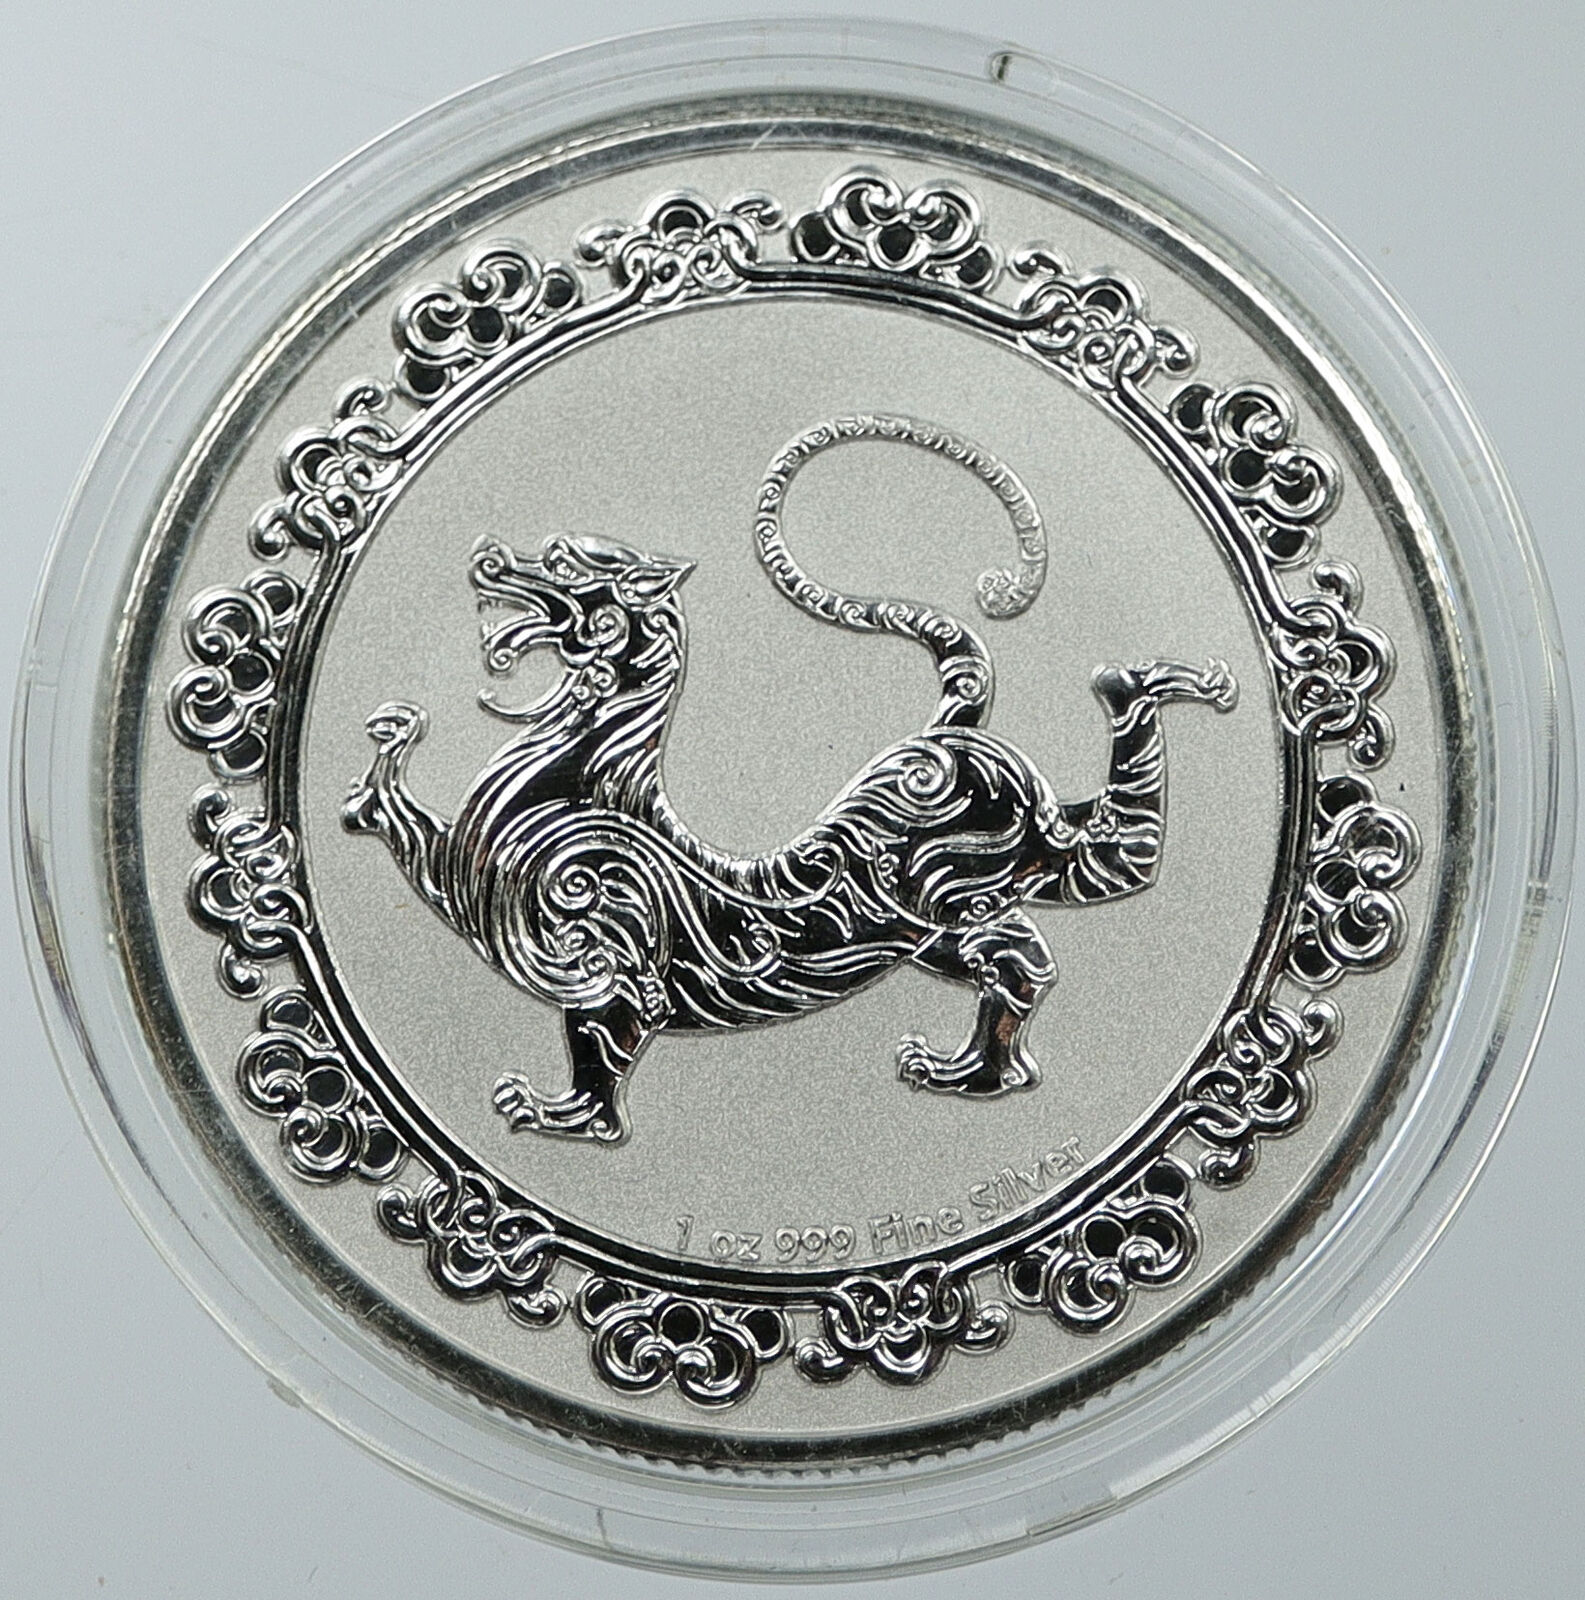 2019 NIUE UK Elizabeth II WHITE TIGER 1 OZ Proof Silver $2 Dollar Coin i116519